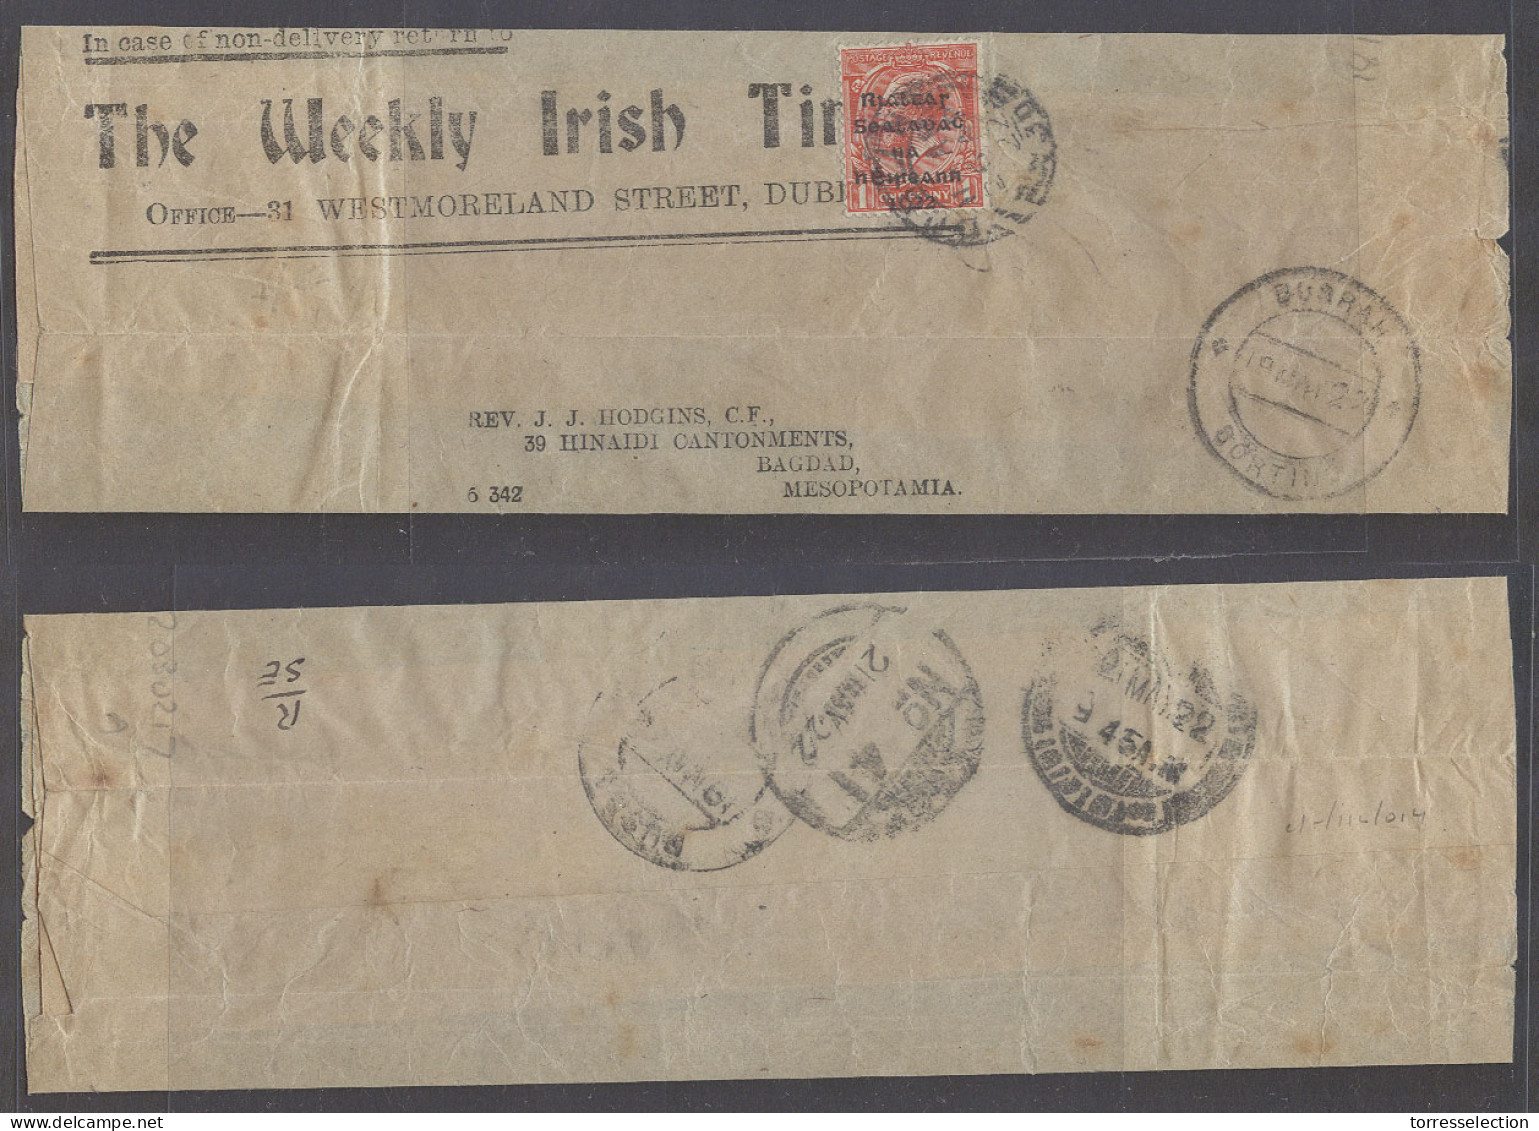 EIRE. 1922 (26 April). Dublin - Iraq, Basrah. Via APO Nº41 Military British Mail. Most Unusual 1st Issue Complete Wrappe - Oblitérés